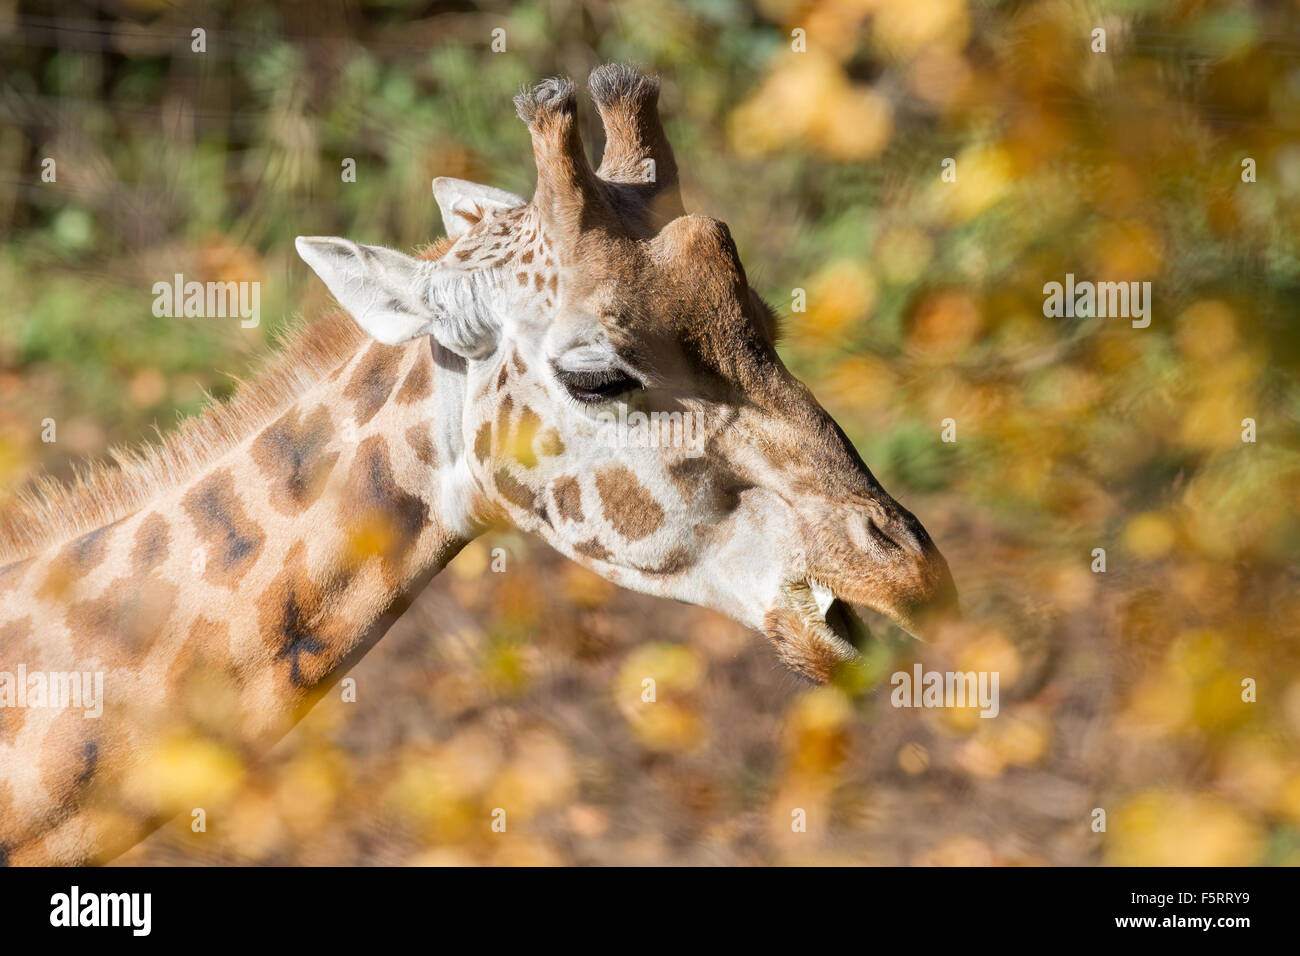 Single giraffe feeding, photographed through the leaves, selective focus Stock Photo